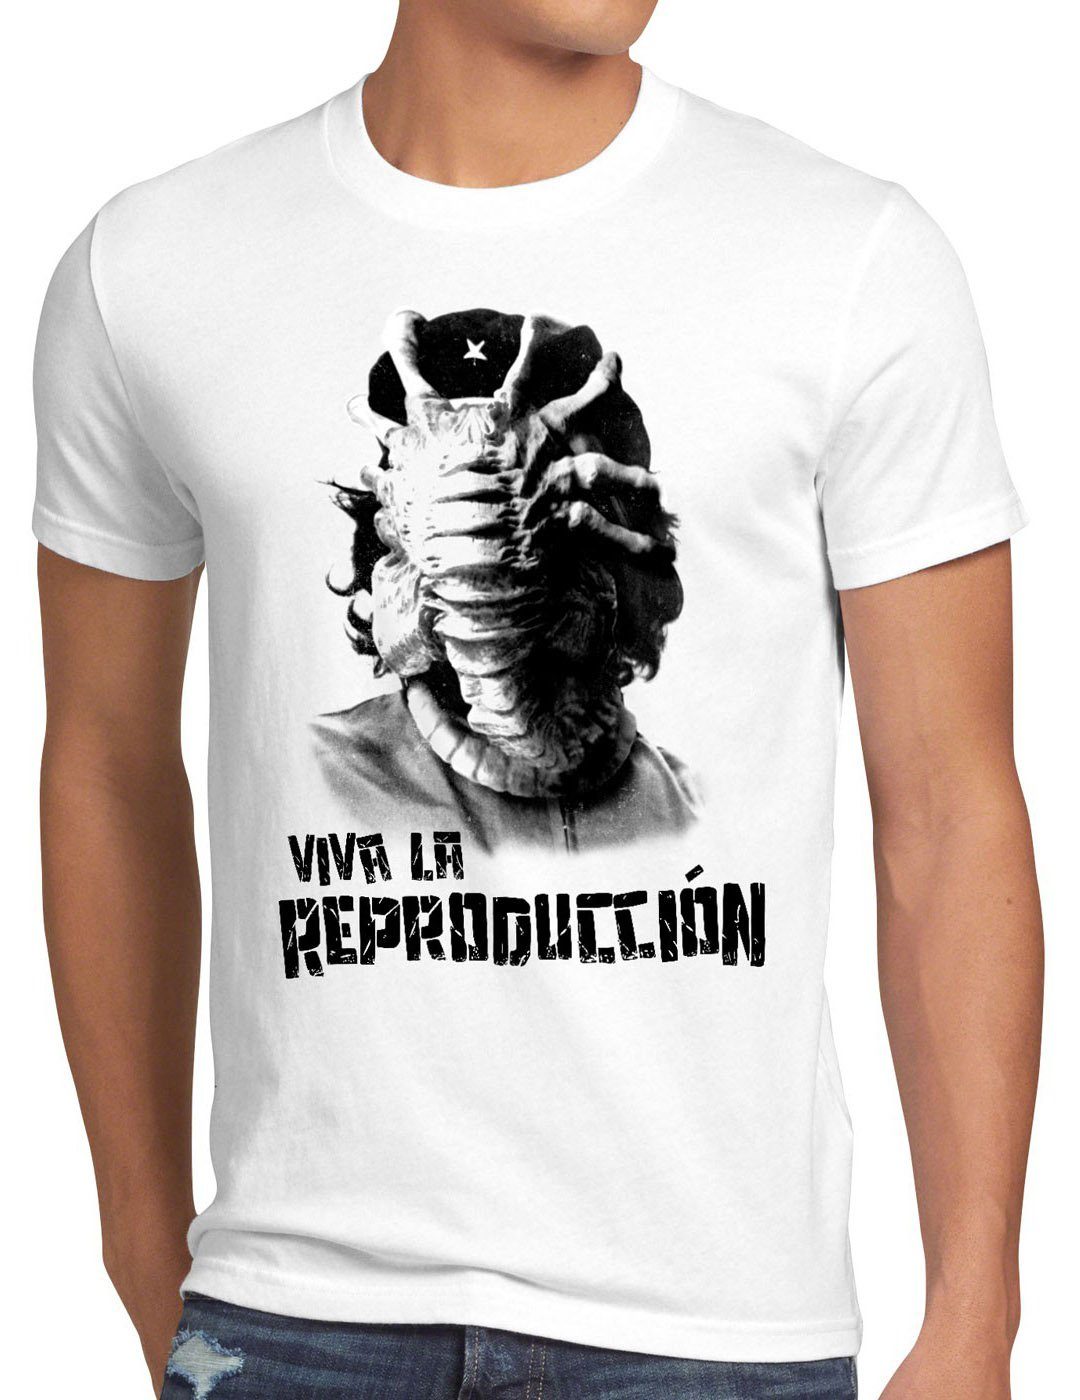 alien T-Shirt kuba style3 guevara Facehugger Print-Shirt Herren weiß che xenomorph Viva kino revolution